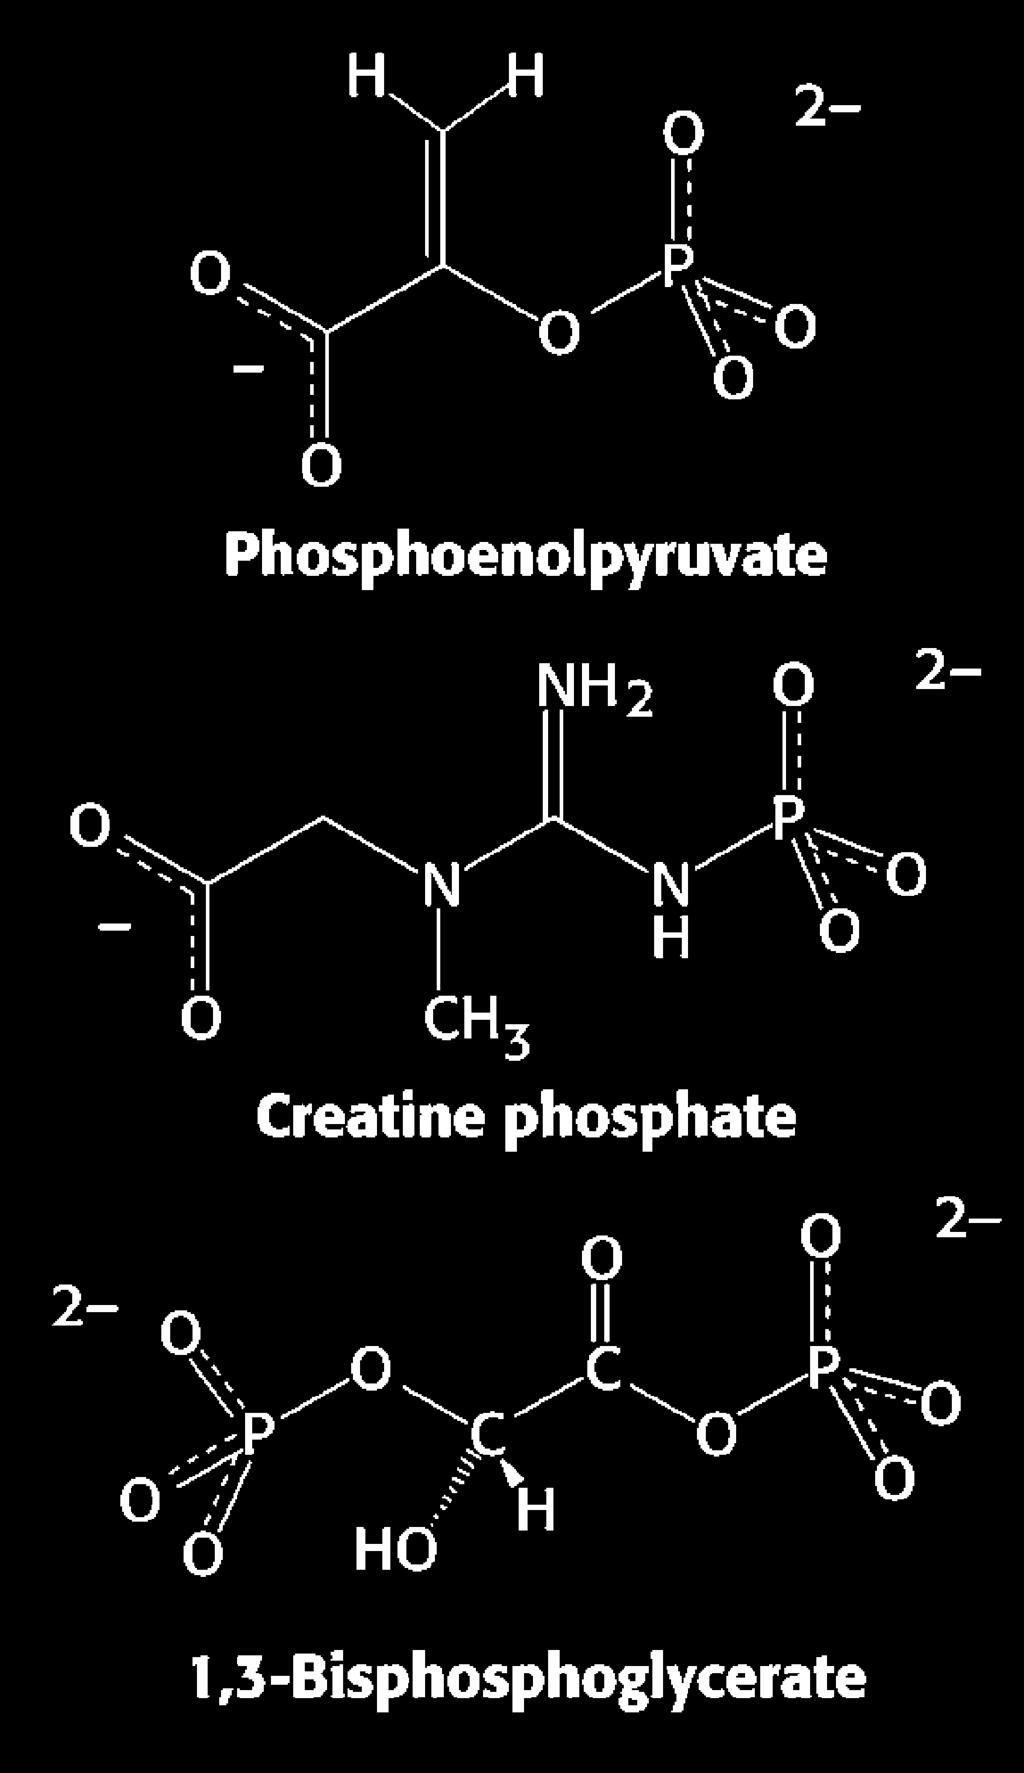 molelcules with favorable phosphoryl transferase energies 23 23